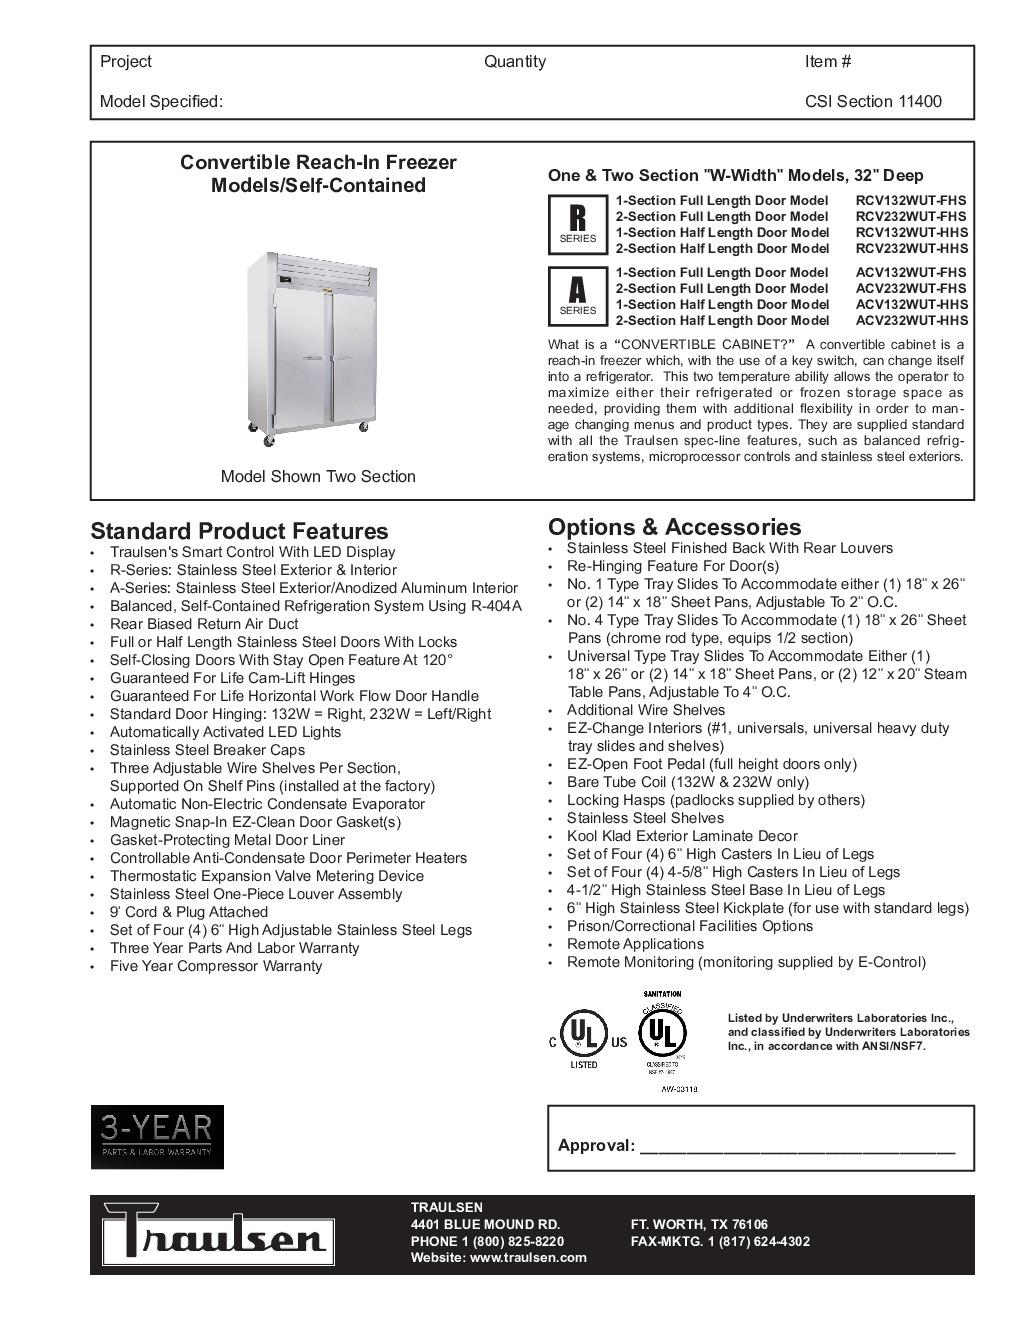 Traulsen ACV232WUT-FHS Convertible Refrigerator Freezer